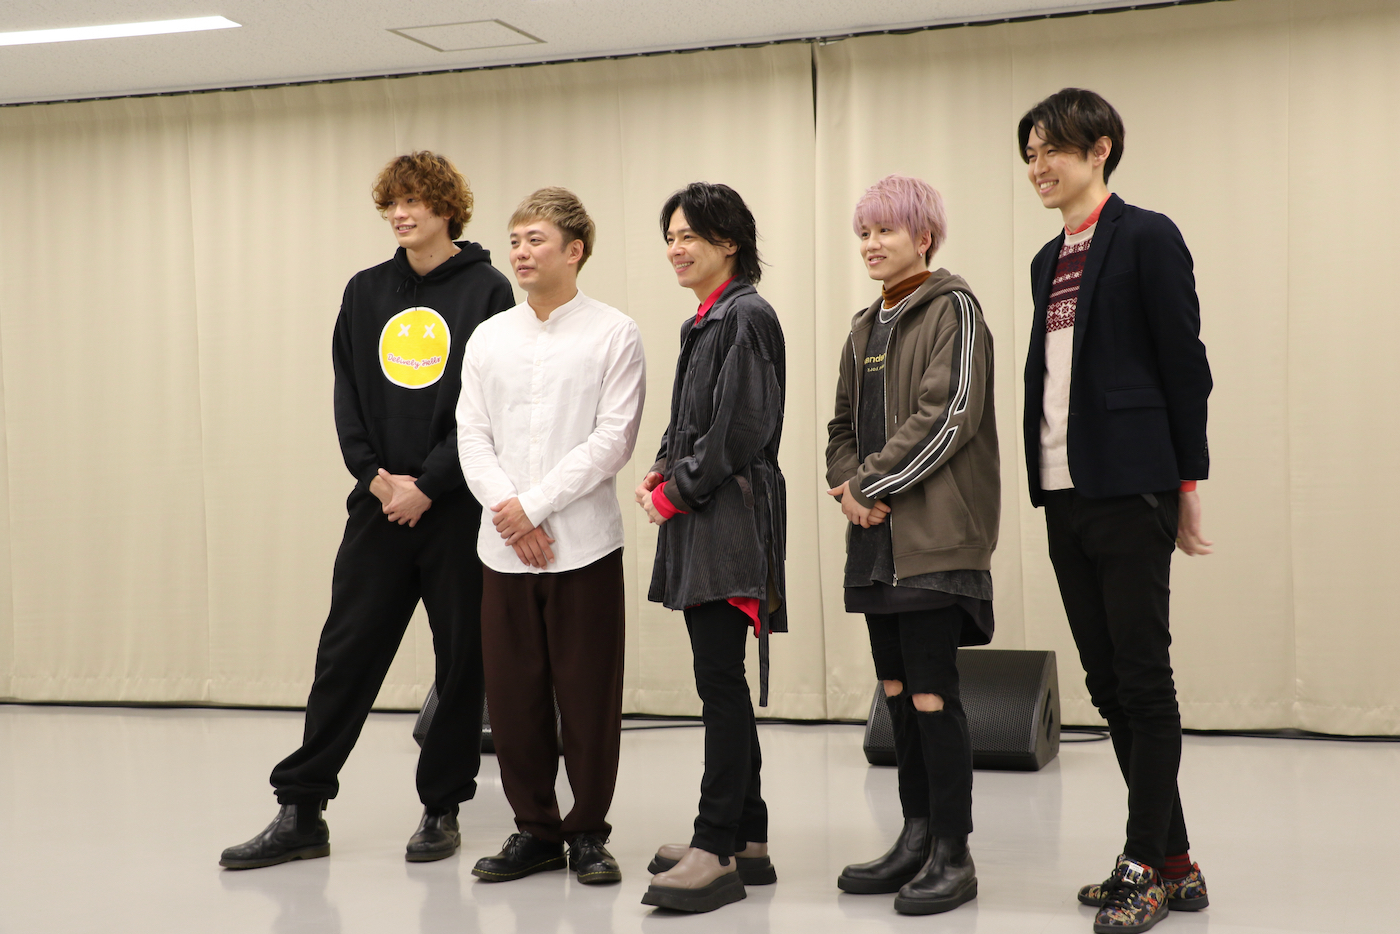 (From left) Keisuke Higashi, Masaaki Fujioka, Akinori Nakagawa, Sota Hanamura, Yasuhiro Yamano